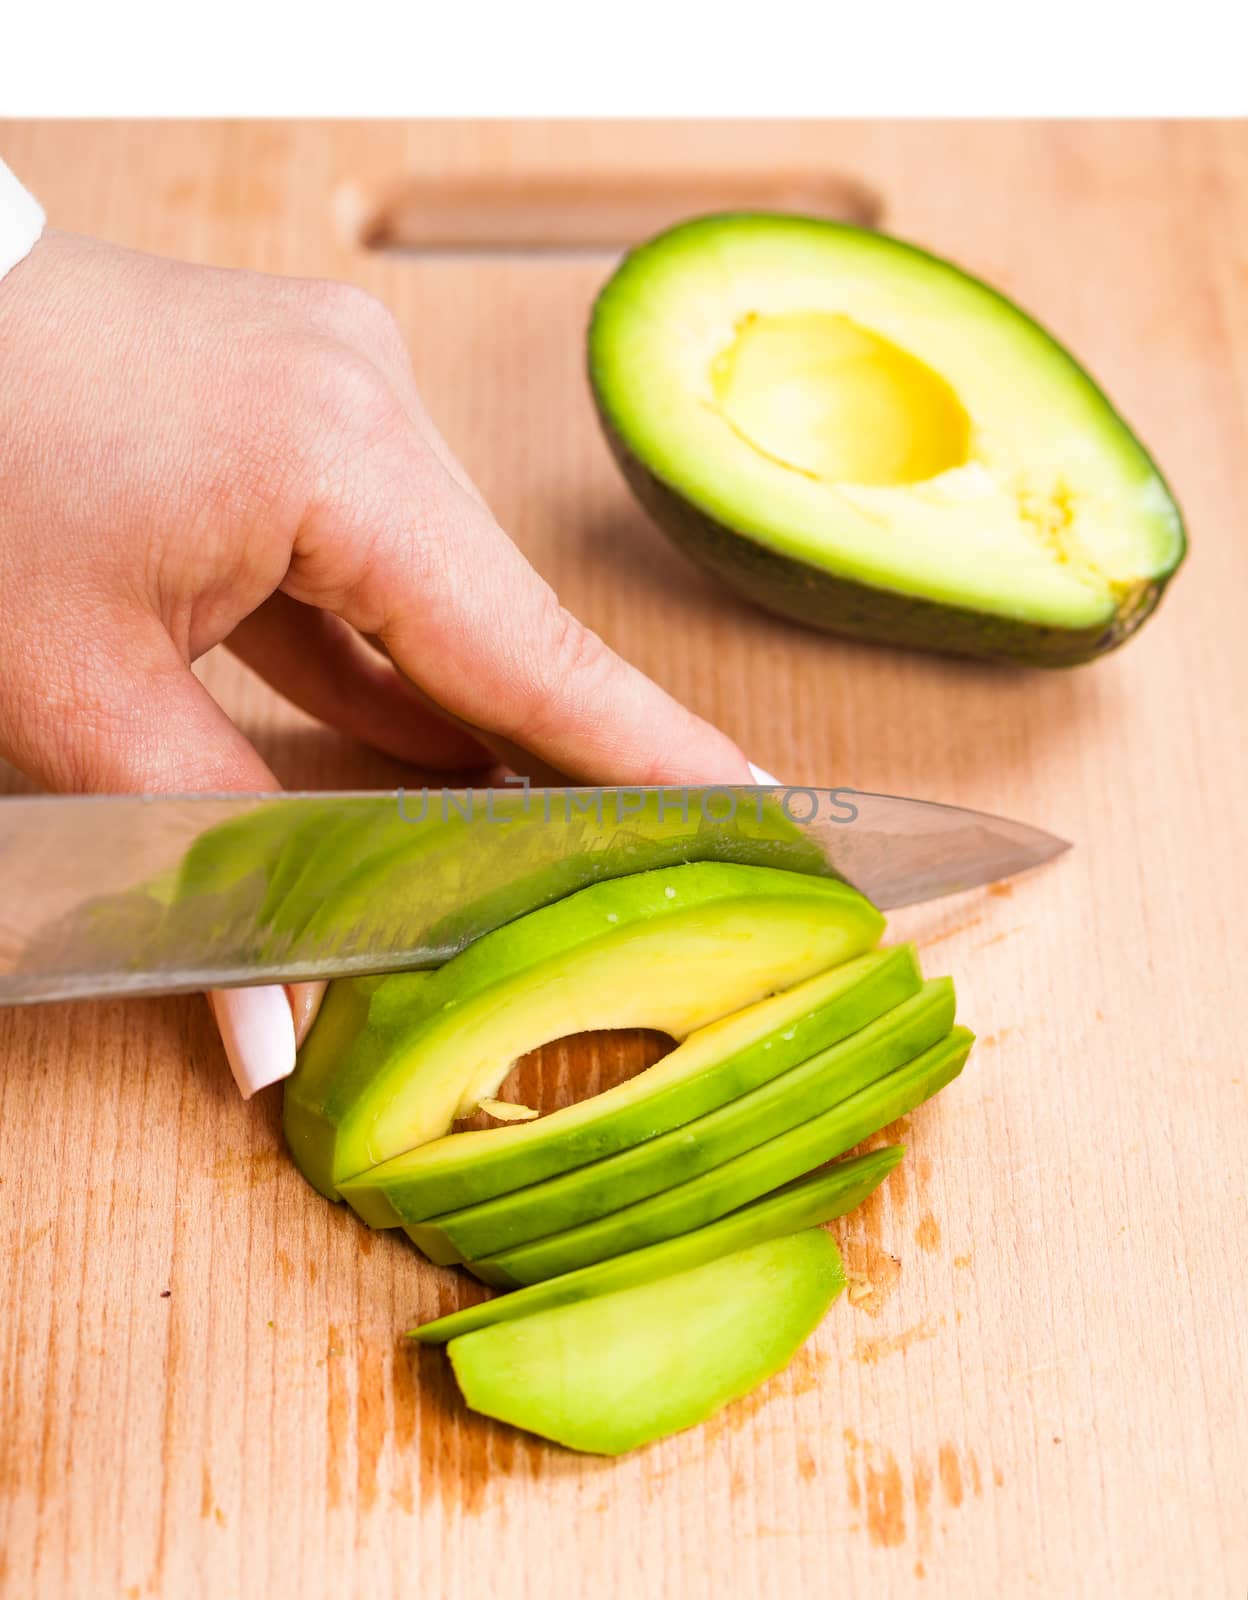  slicing fresh avocado close-up on a wooden board